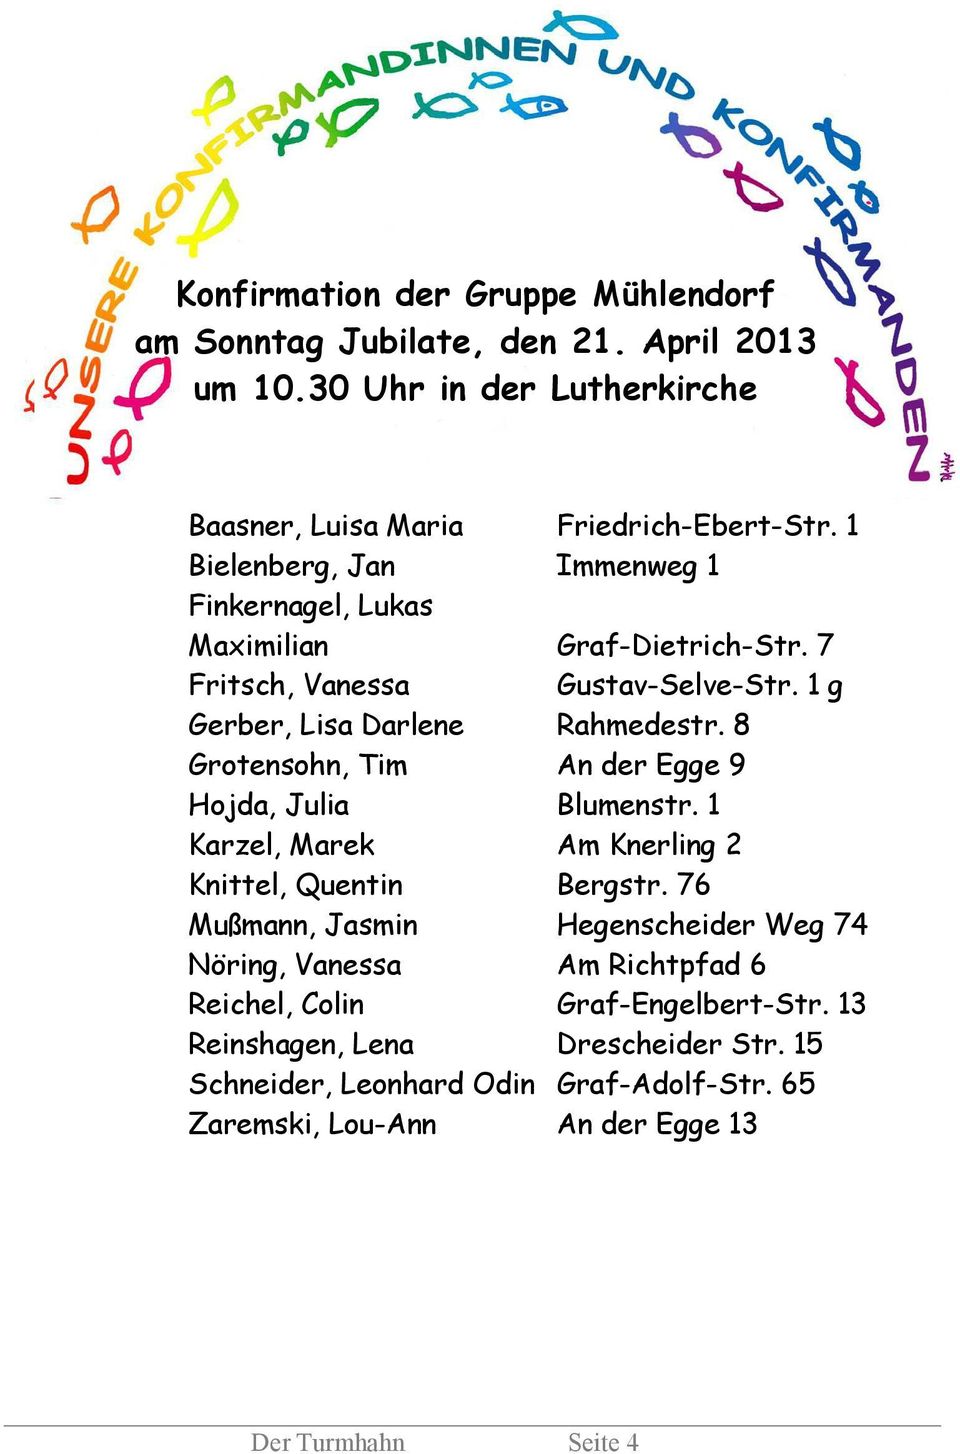 8 Grotensohn, Tim An der Egge 9 Hojda, Julia Blumenstr. 1 Karzel, Marek Am Knerling 2 Knittel, Quentin Bergstr.